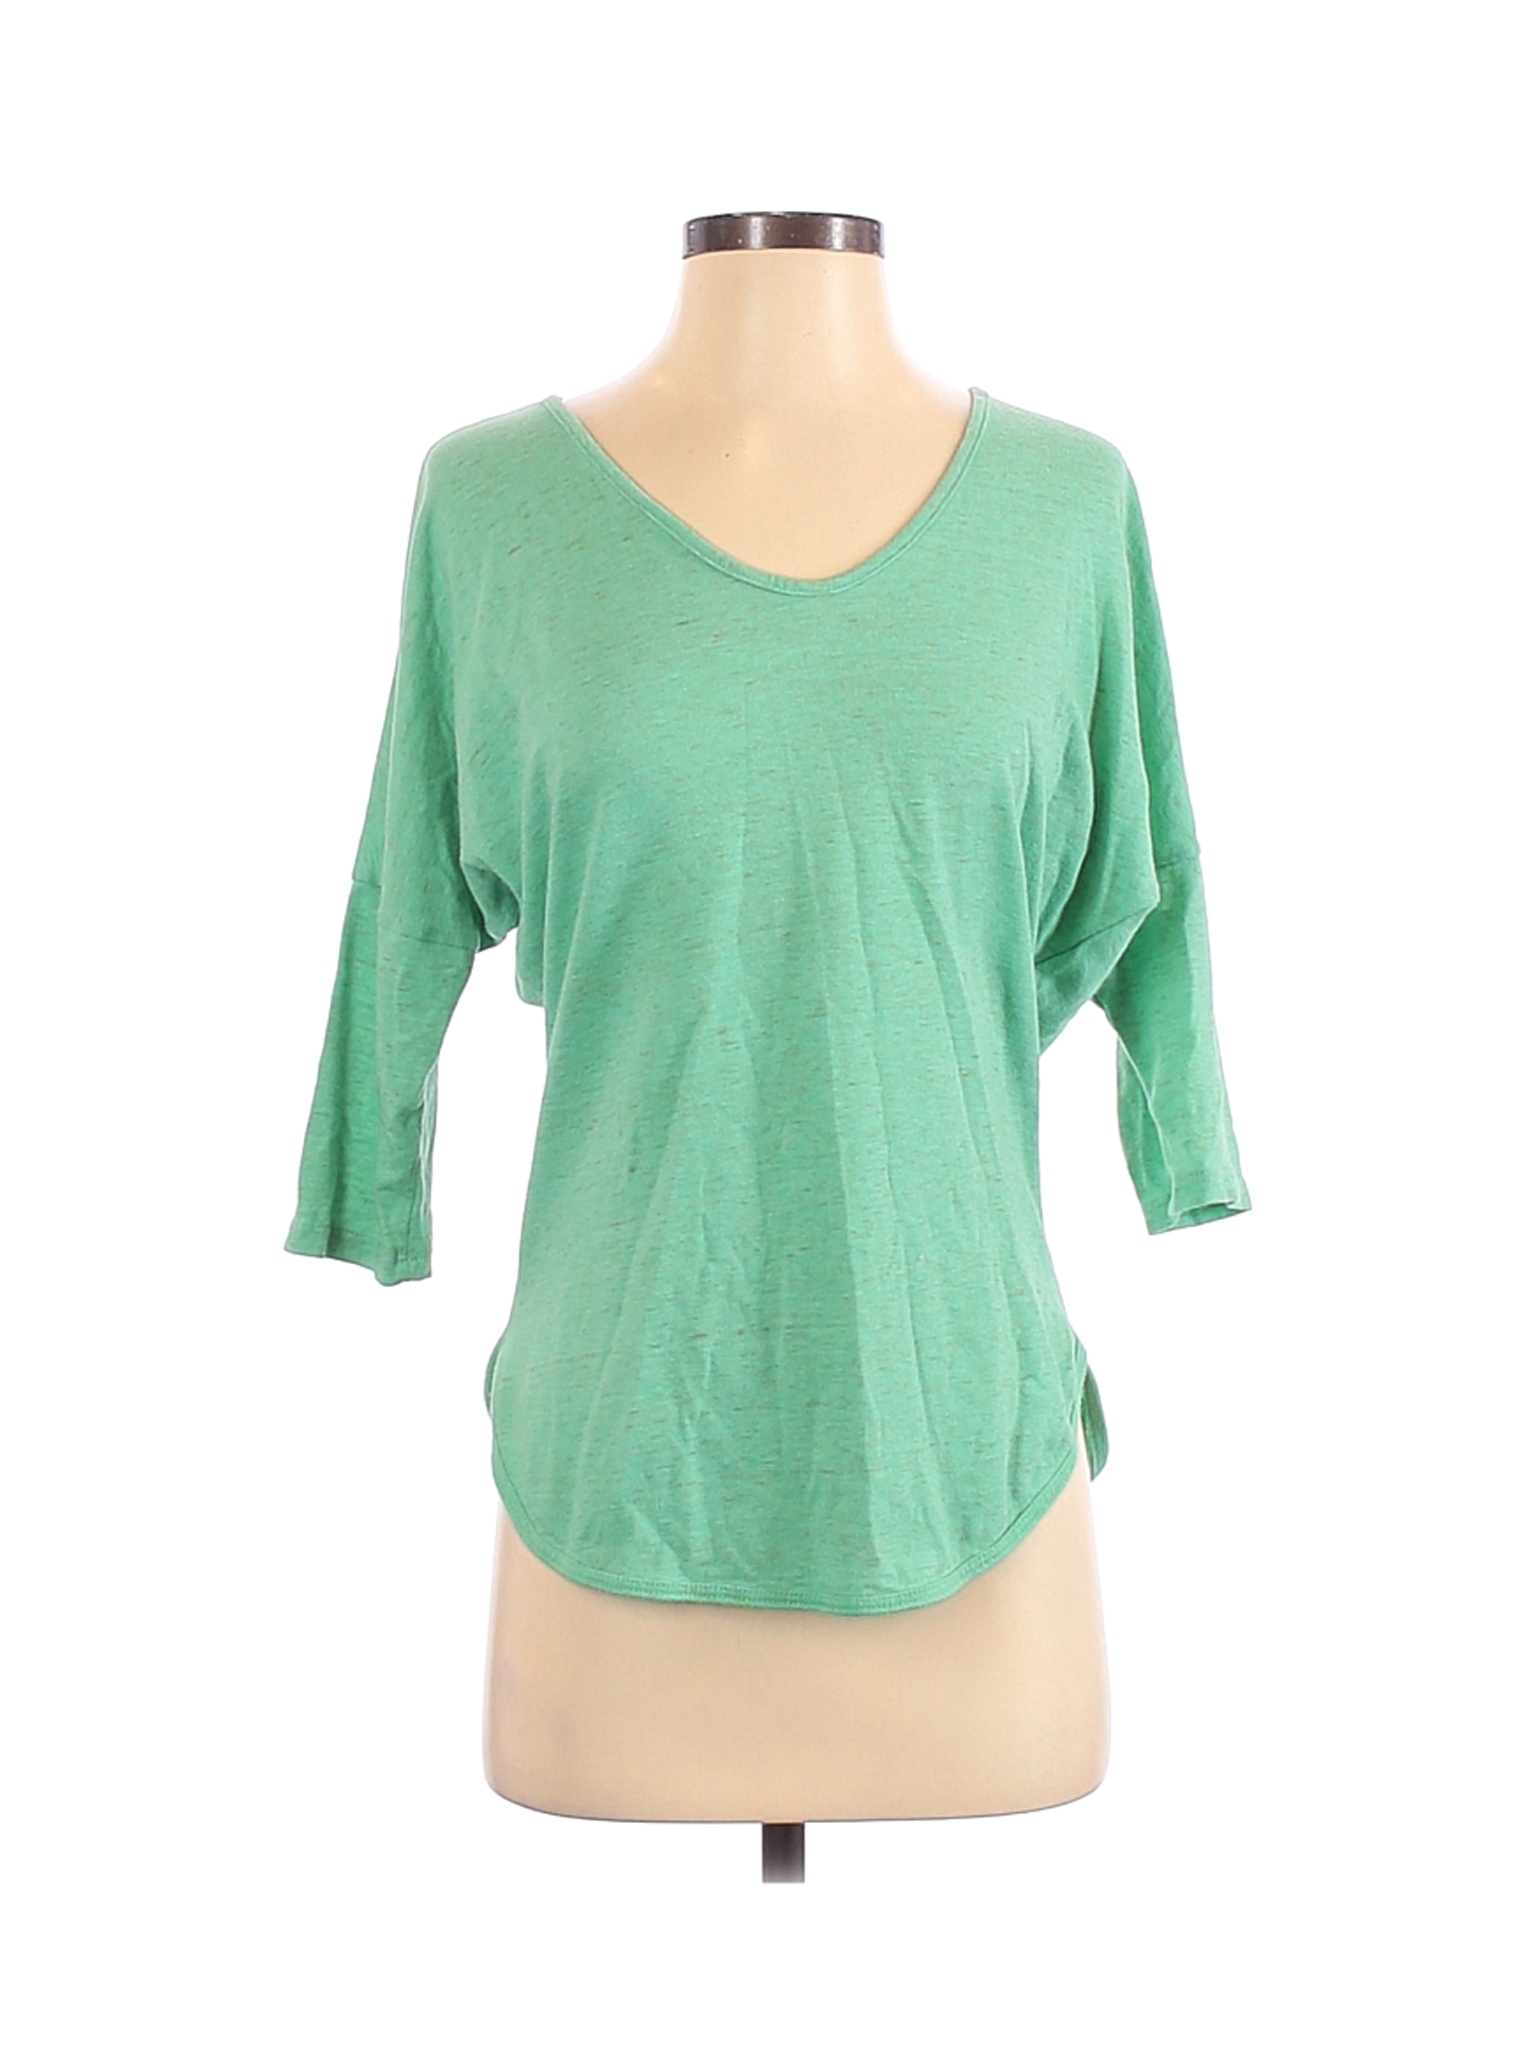 C&C California Women Green 3/4 Sleeve T-Shirt S | eBay